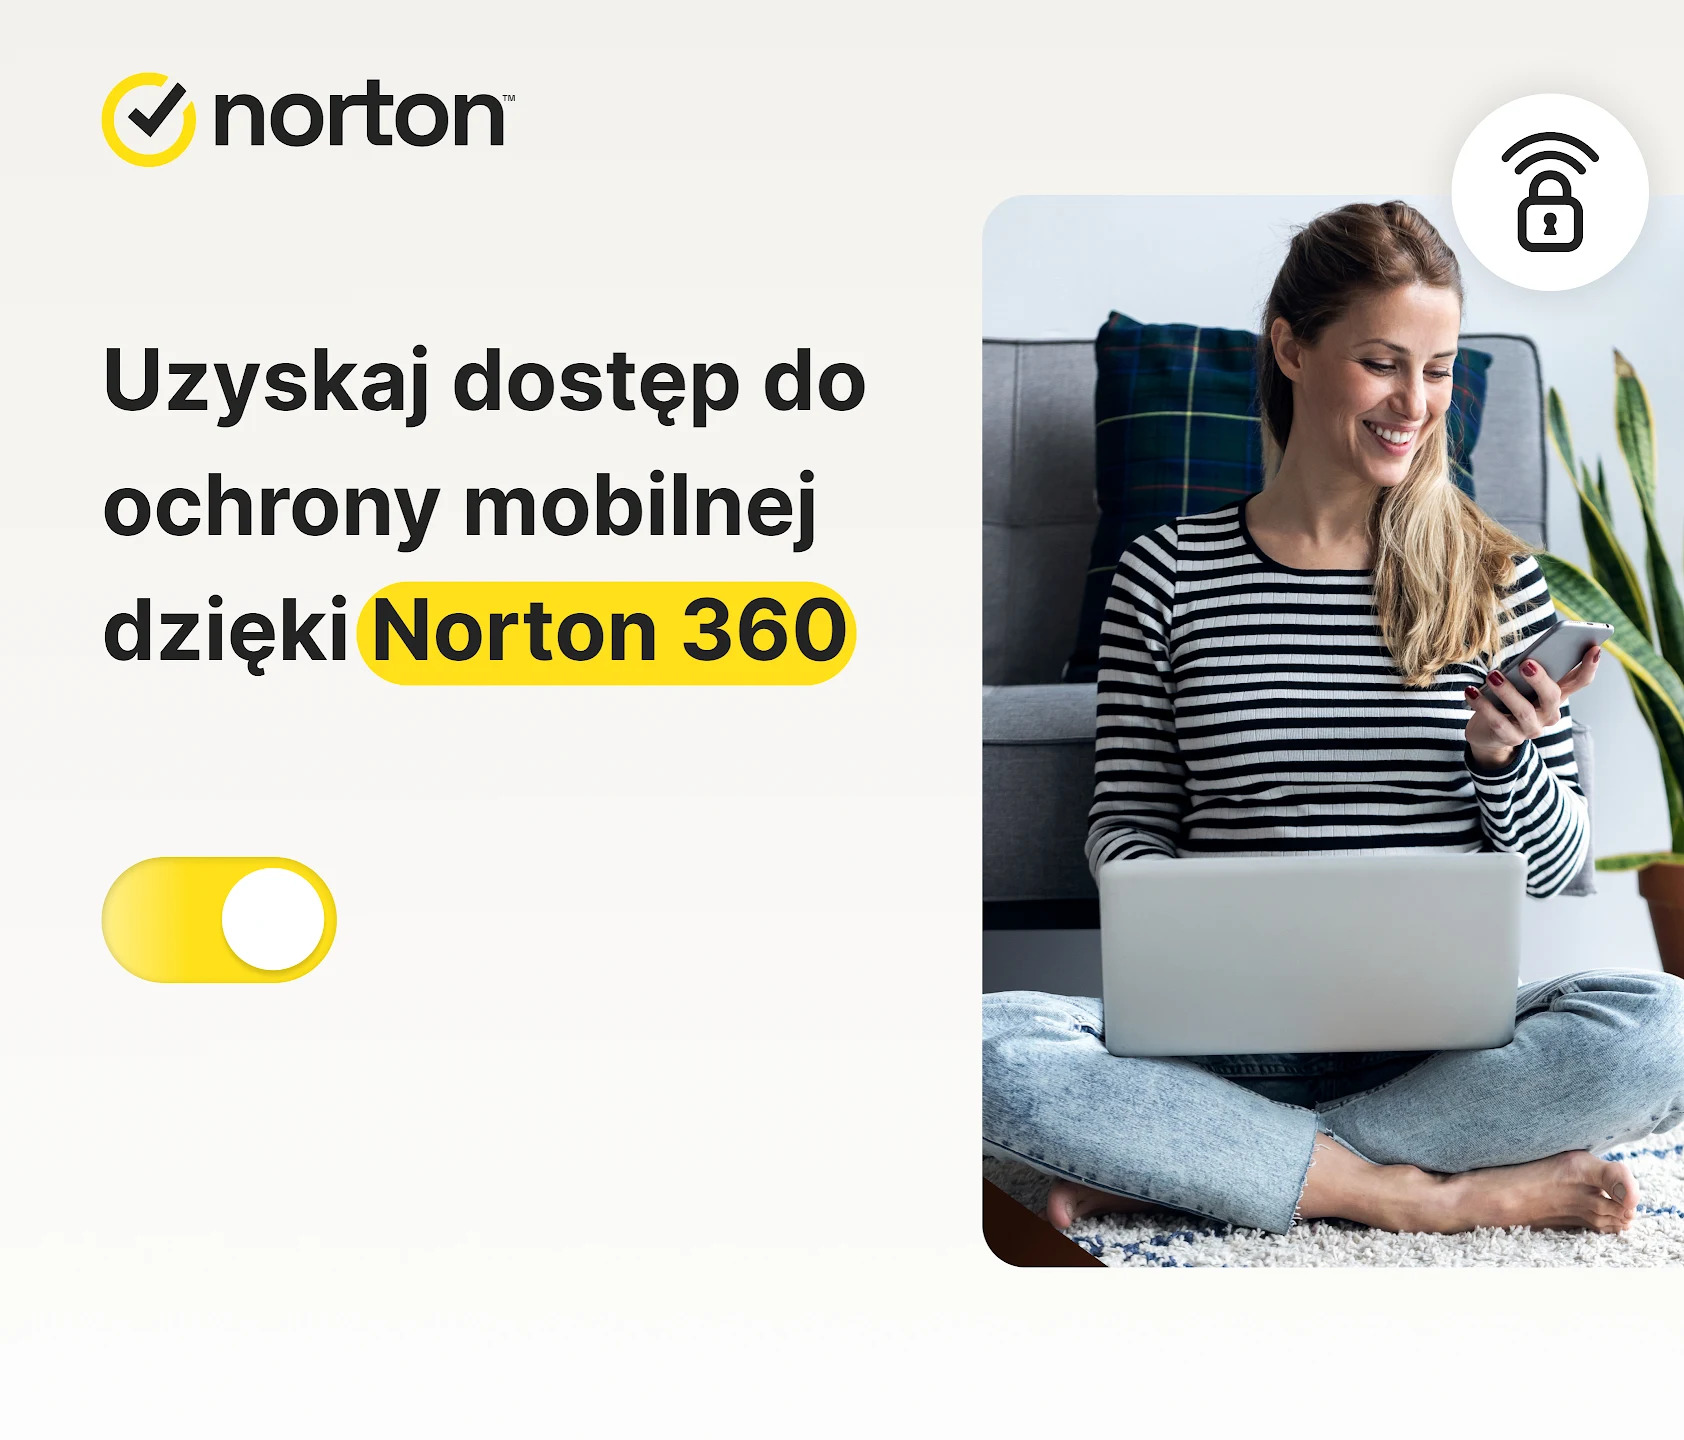 Norton 360 for Mobile to antywirus na smartfona